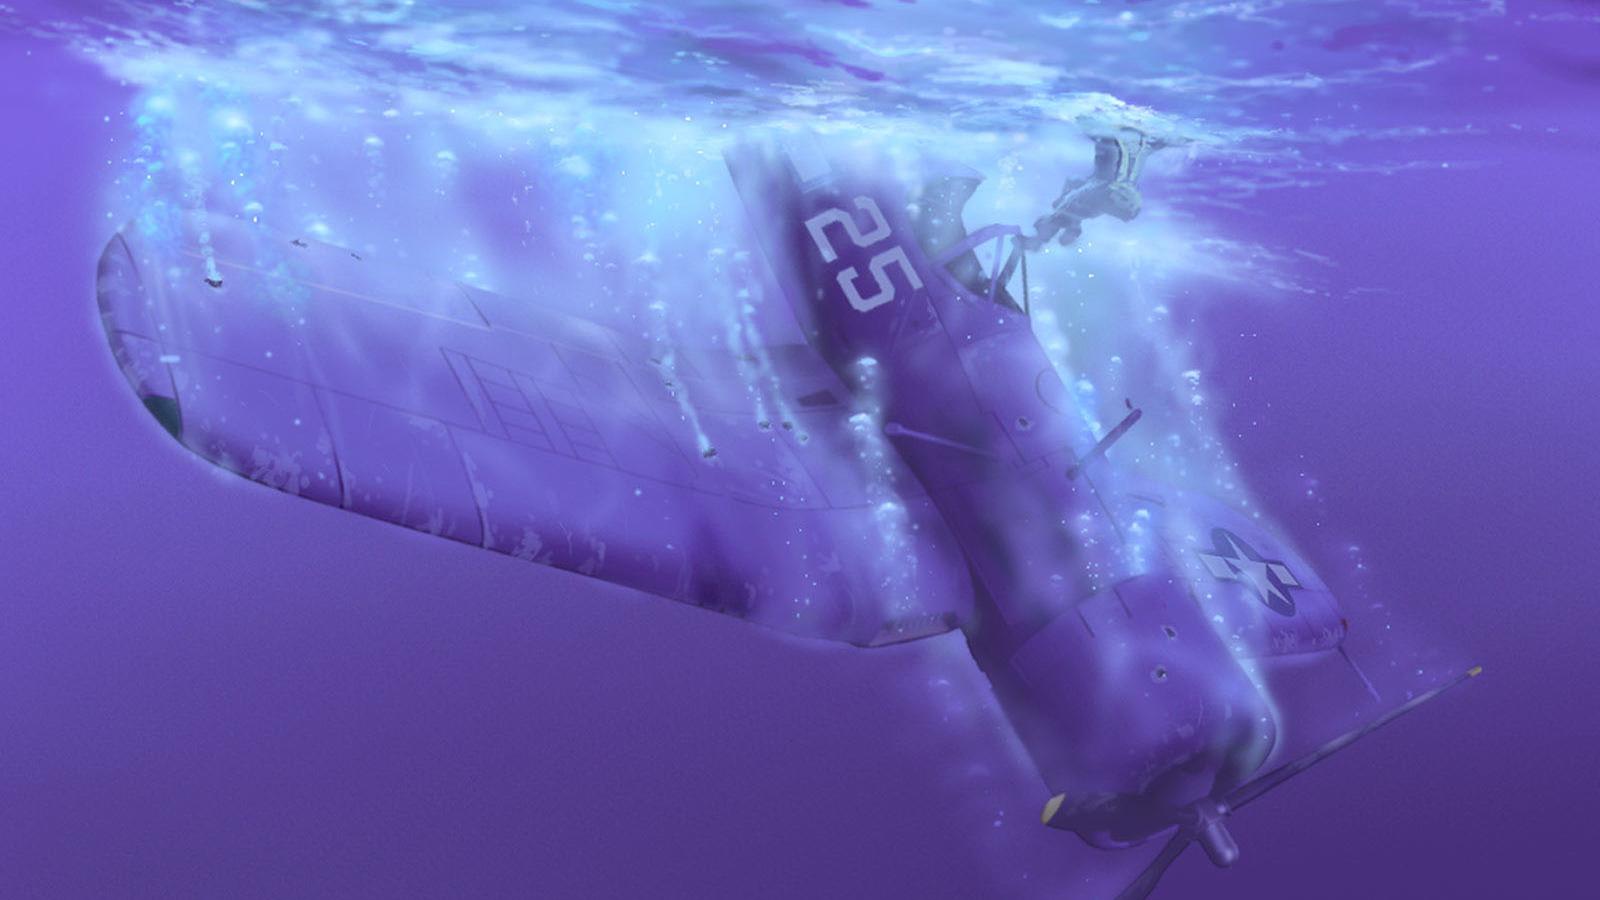 Download Wallpaper Plane crash into water 1600 x 900 widescreen